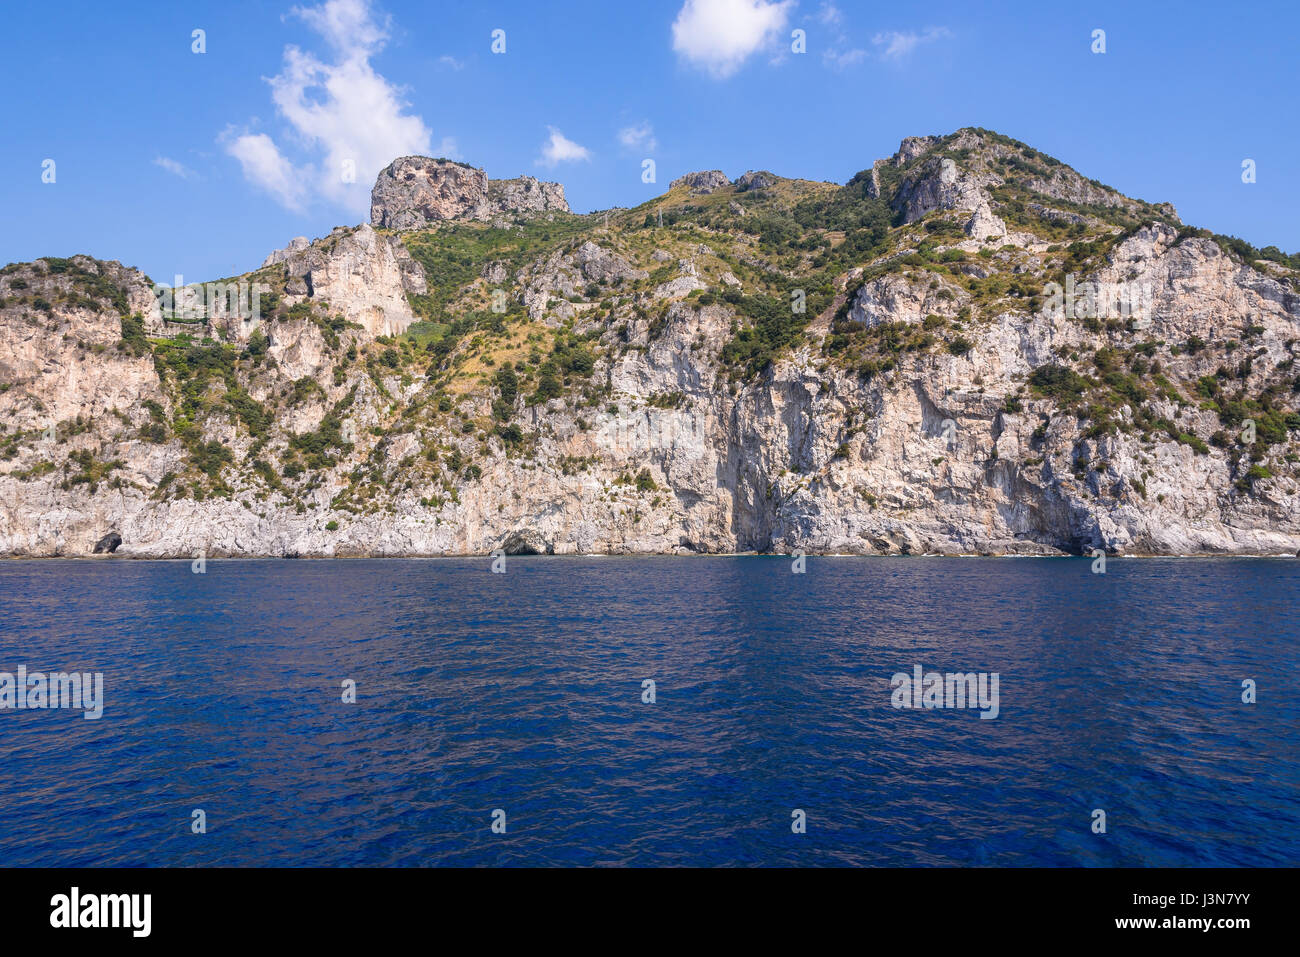 View of Amalfi coast seen from the sea, Campania, Italy Stock Photo